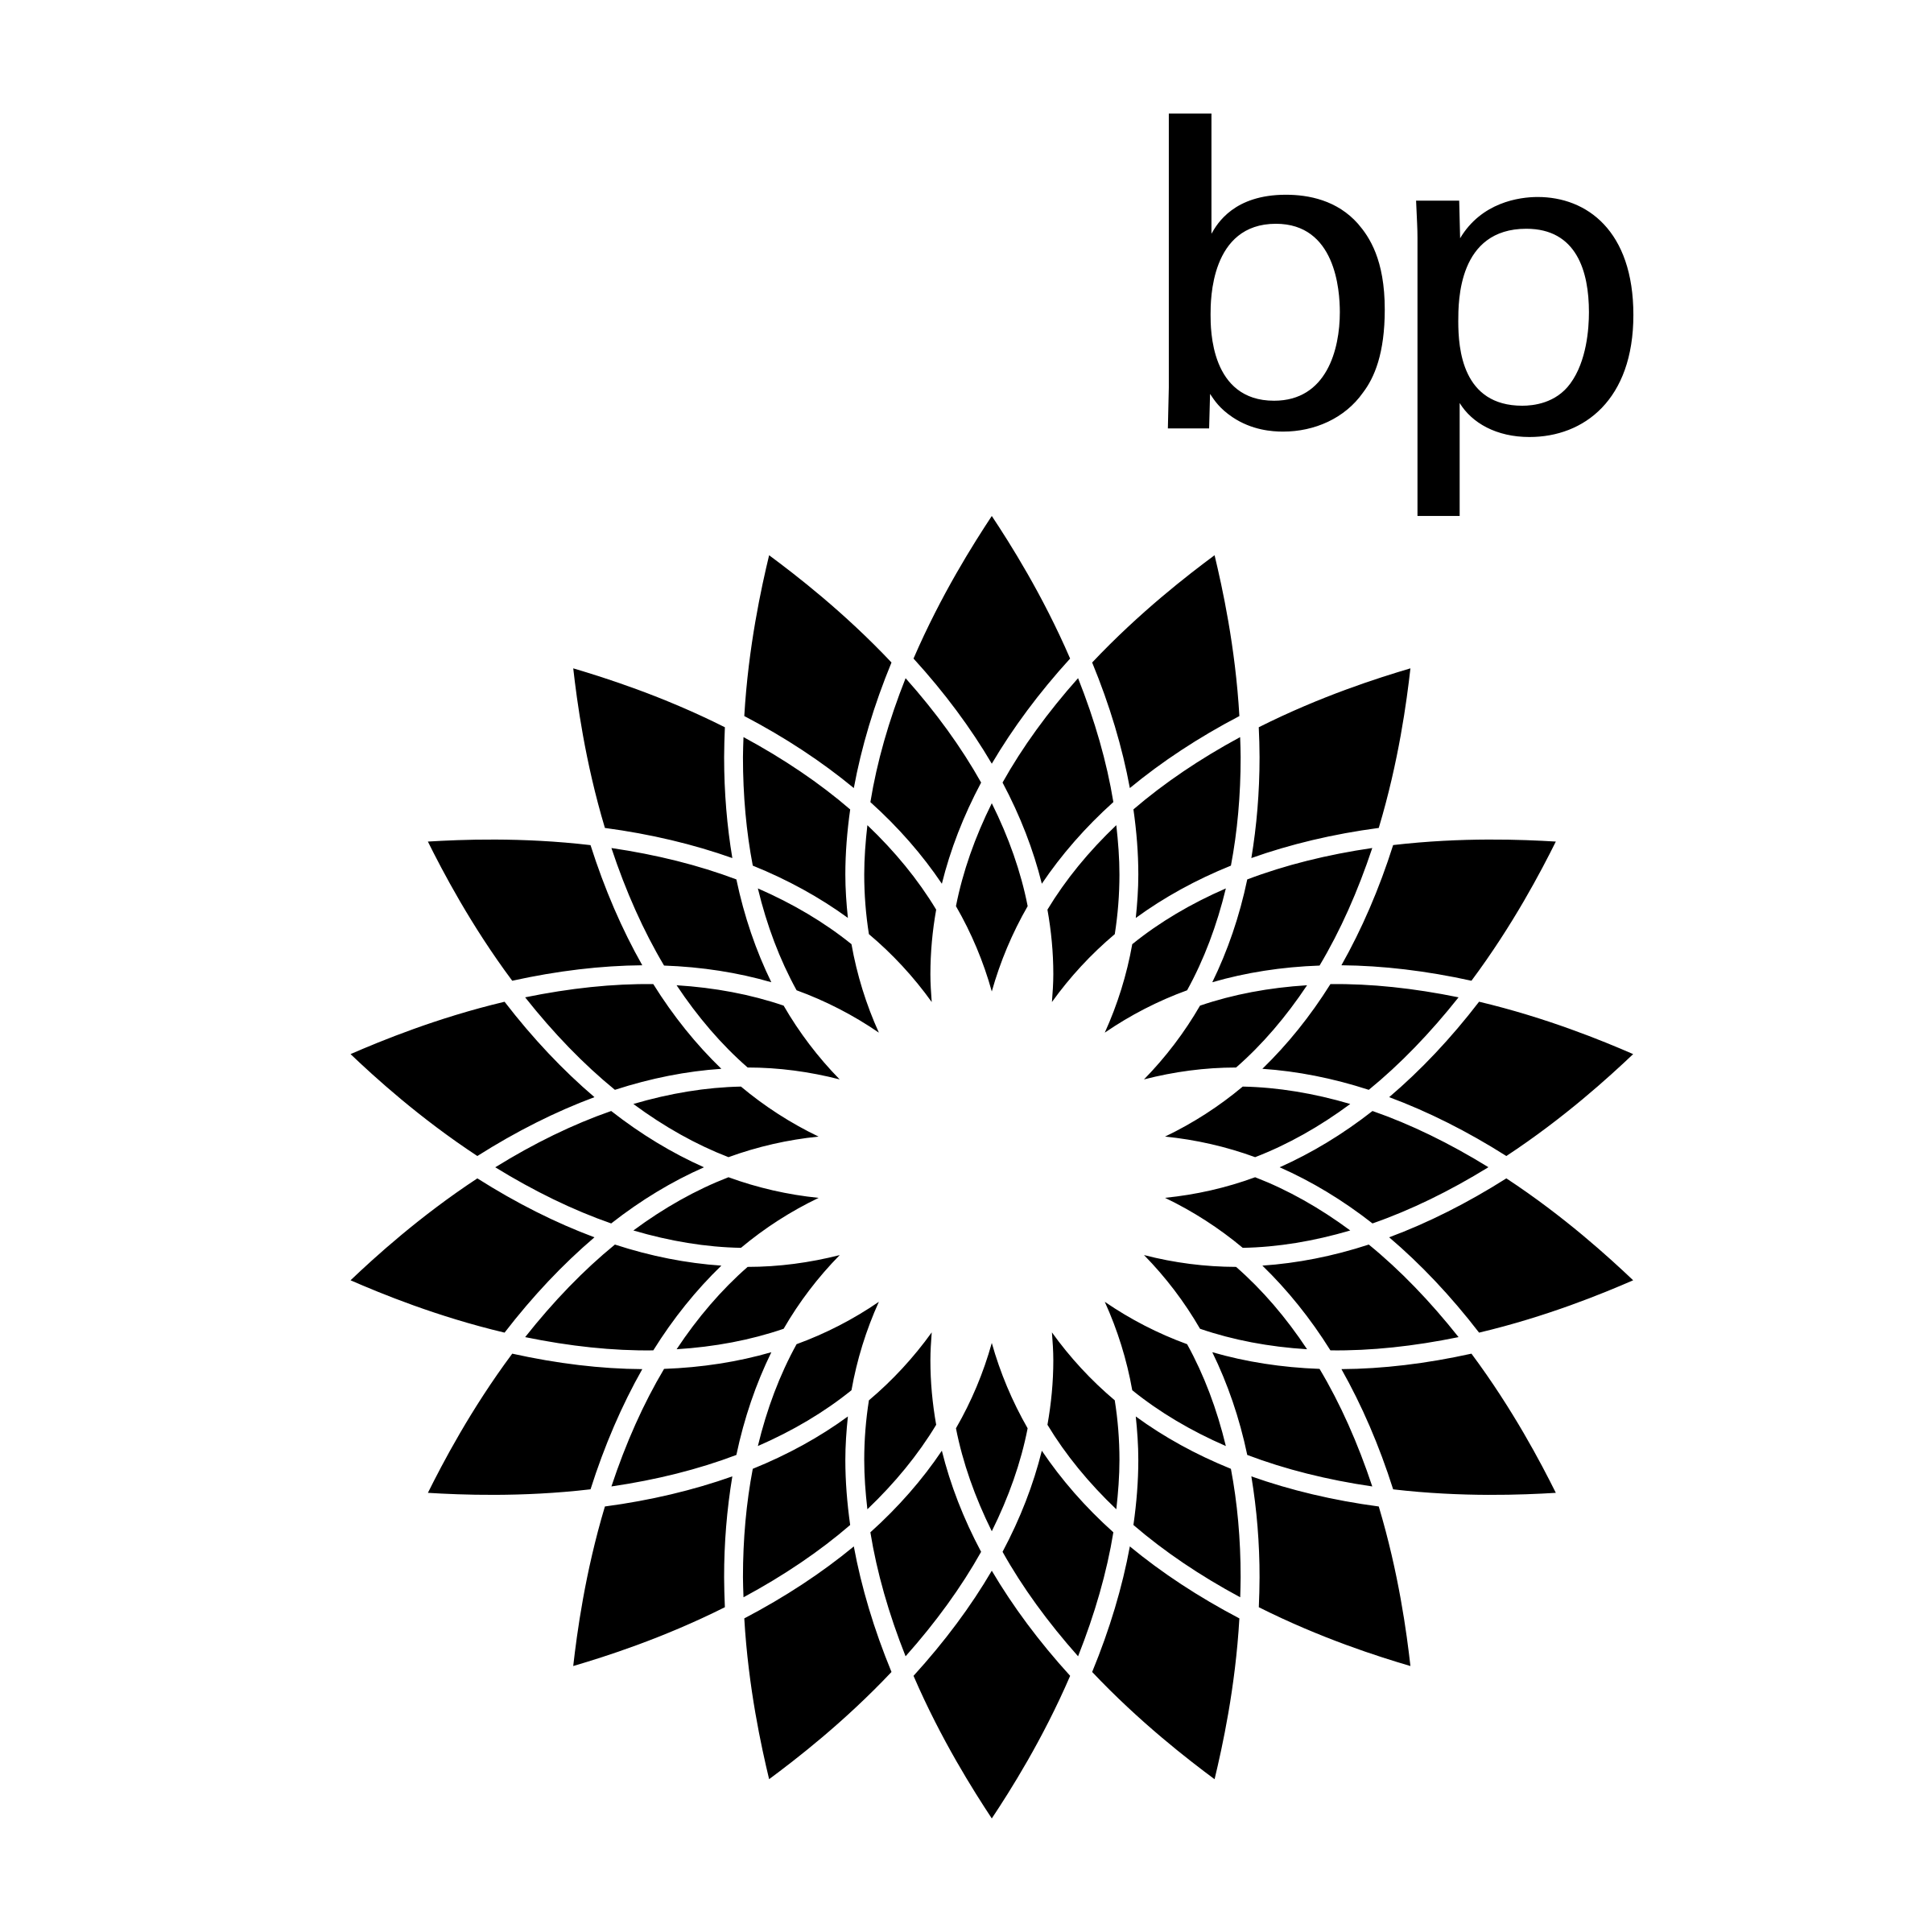 bp-2-logo-black-and-white.png